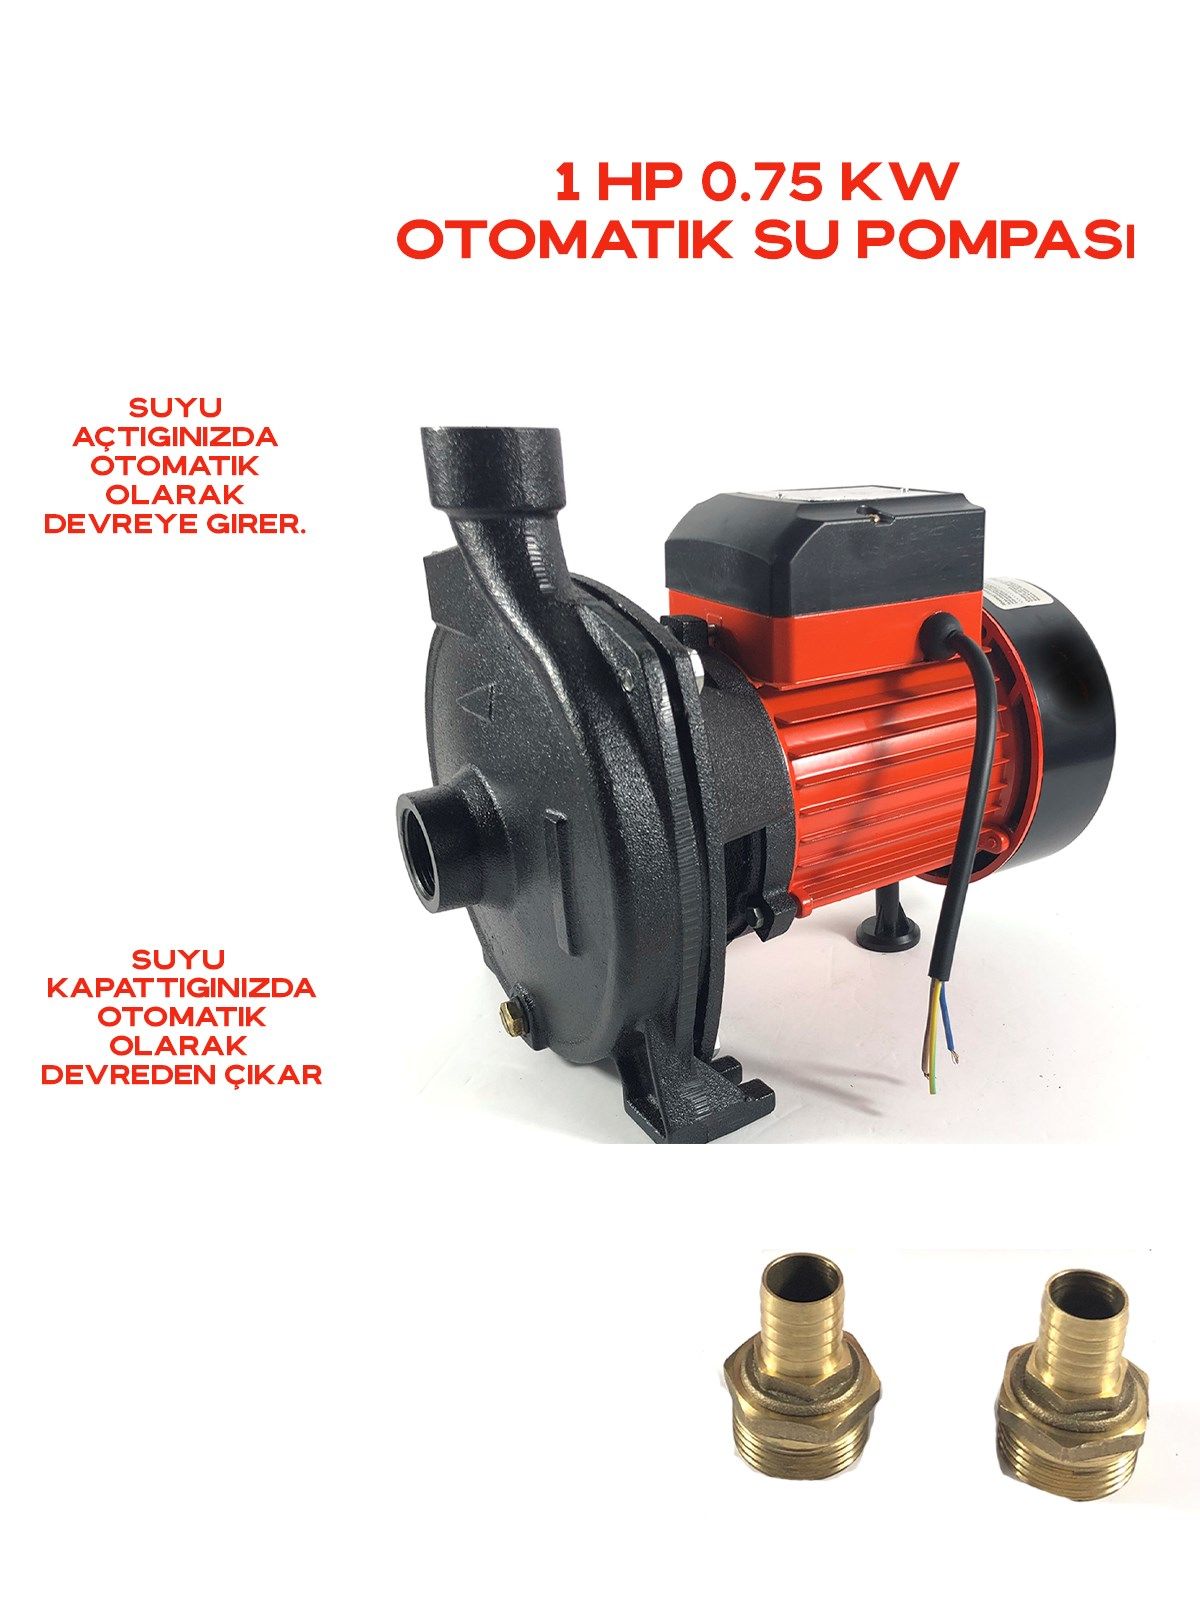 Otomatik Sistem Su Pompası 1hp 0.75 Kw Otomatik Pompa